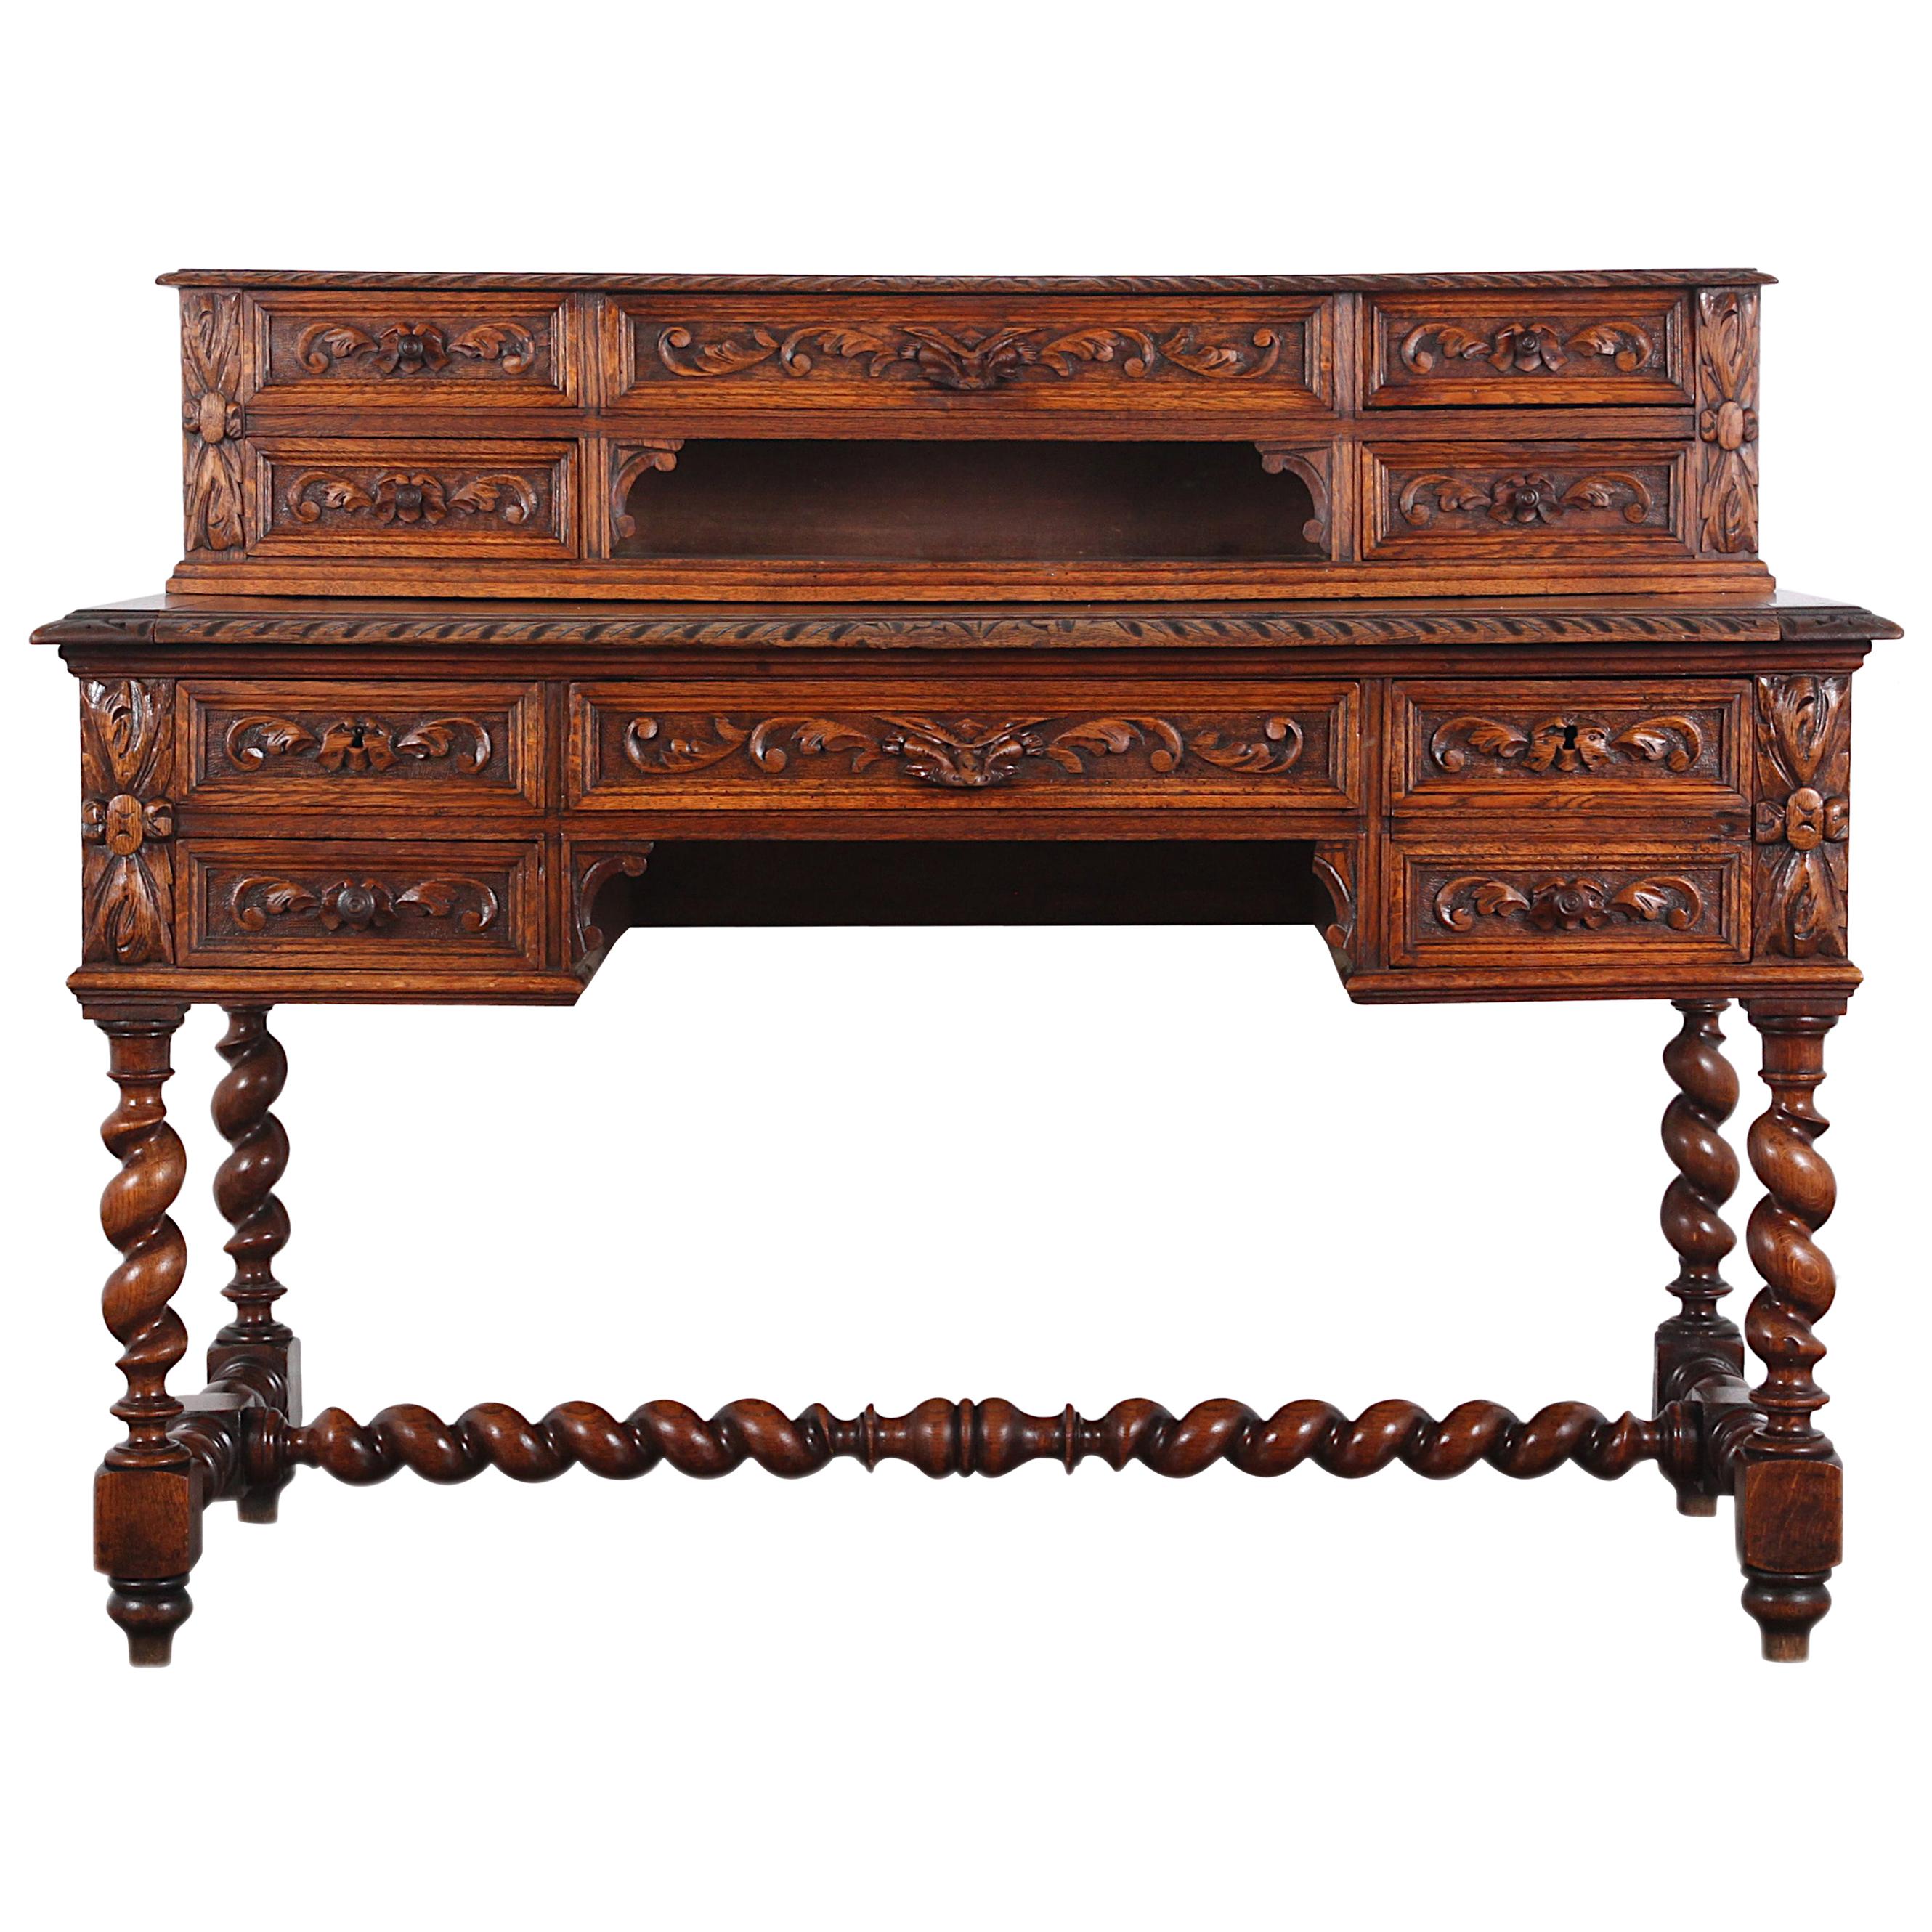 19th Century French Carved Oak Renaissance Revival Desk